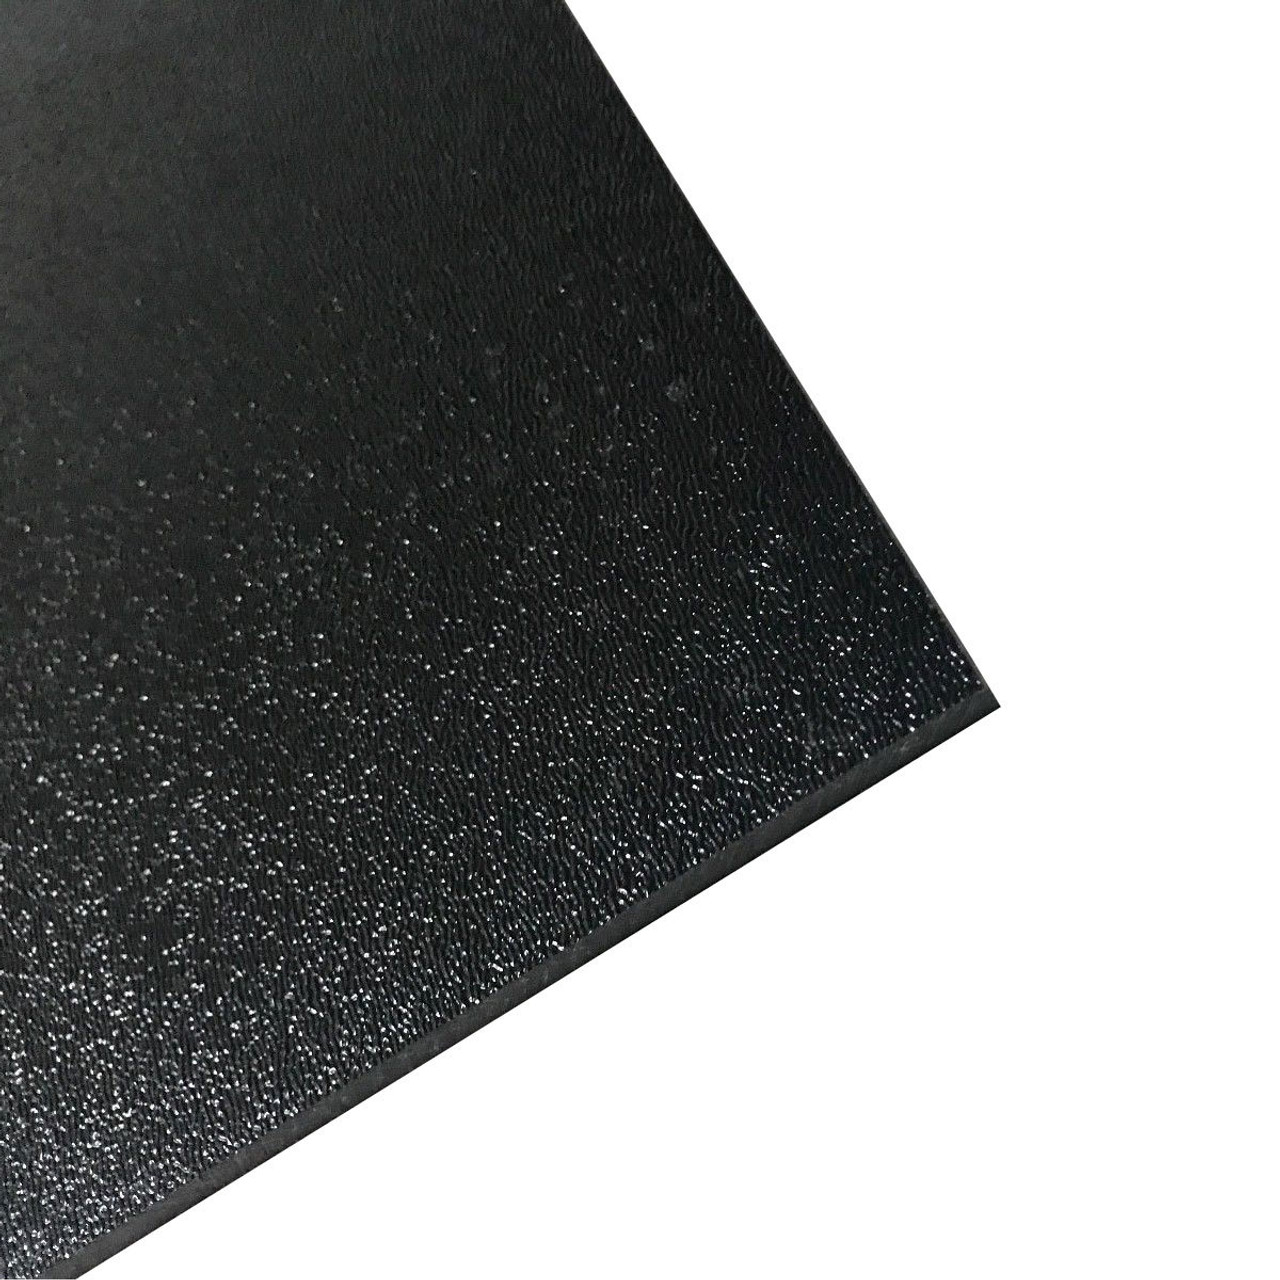 1 Piece Black Abs Plastic Sheets 300x300x0.5mm Black Abs Plastic